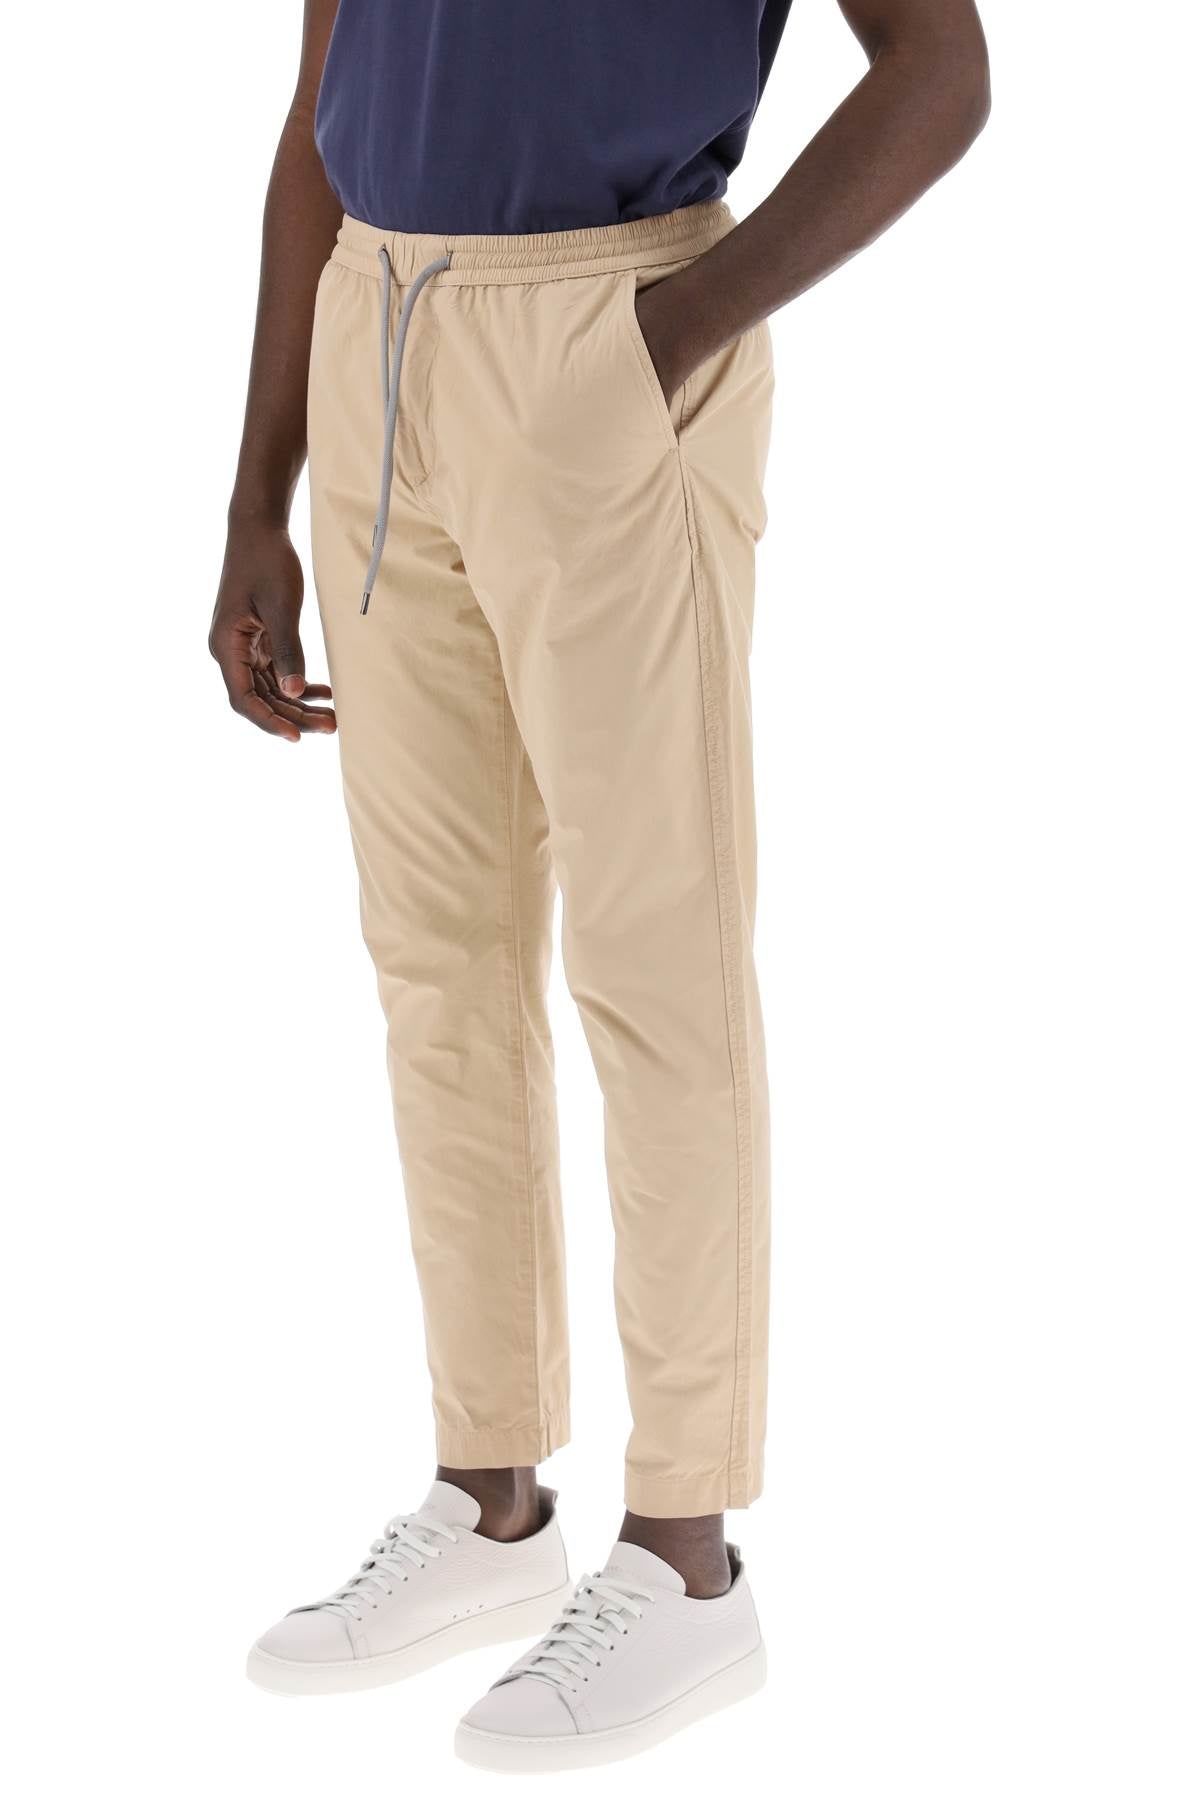 Ps paul smith lightweight organic cotton pants-3